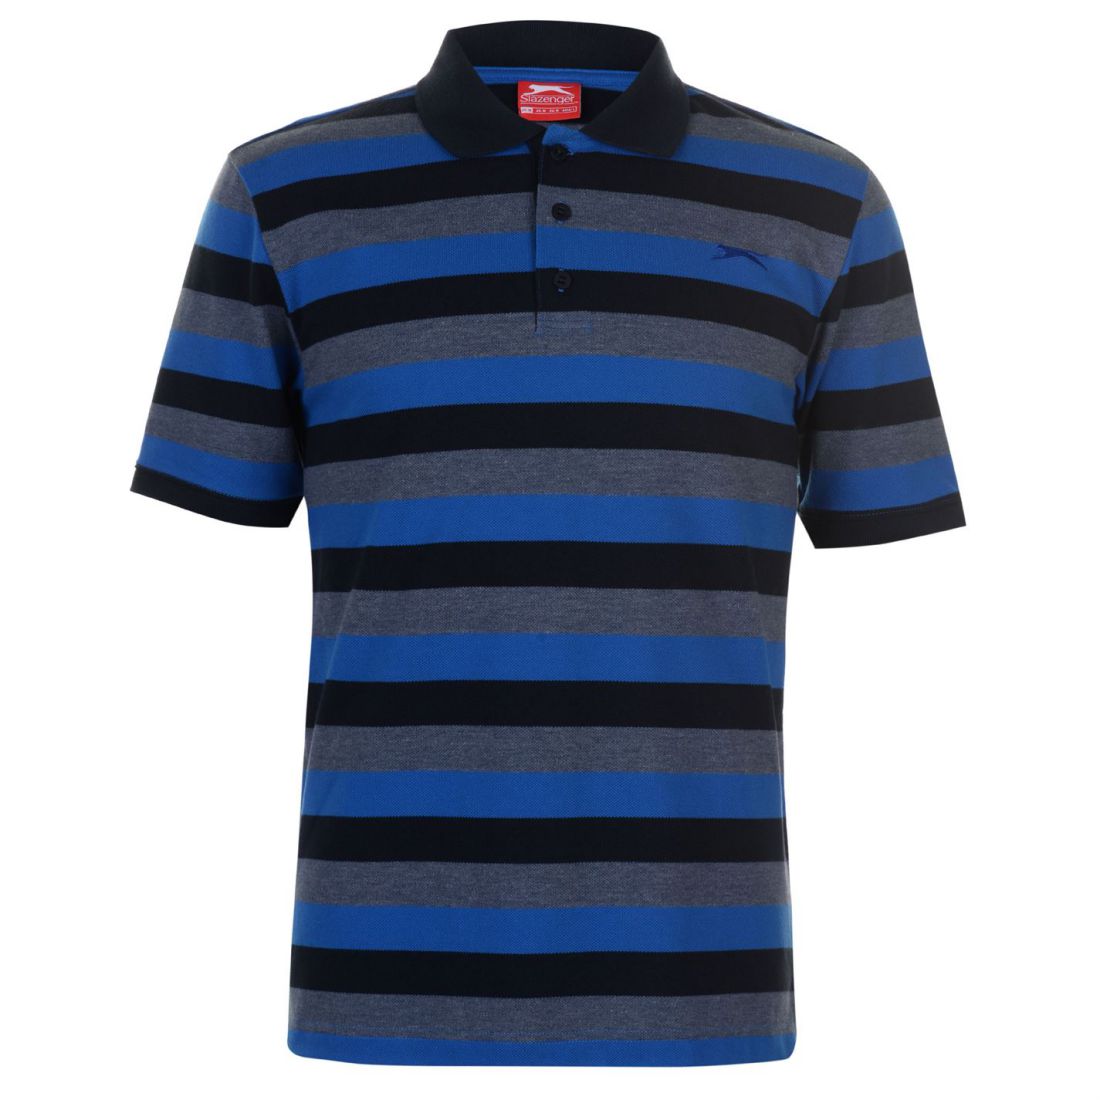 Slazenger Mens Pique Polo Shirt Classic Fit Tee Top Short Sleeve Stripe Striped